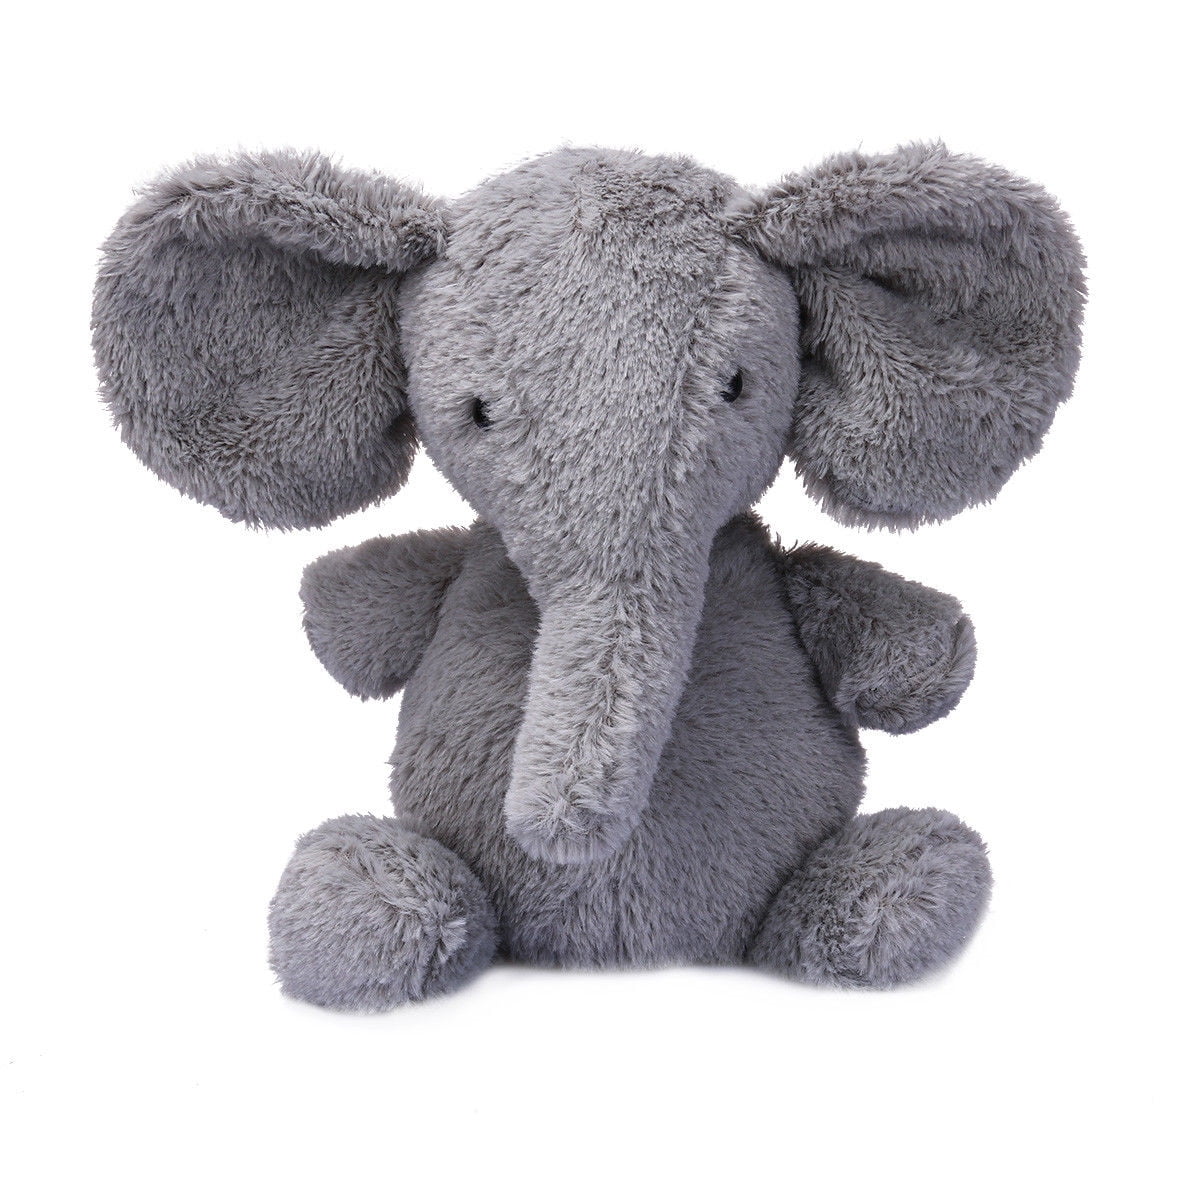 Gray long nose elephant stuffed animals soft toy plush doll new child gifts 